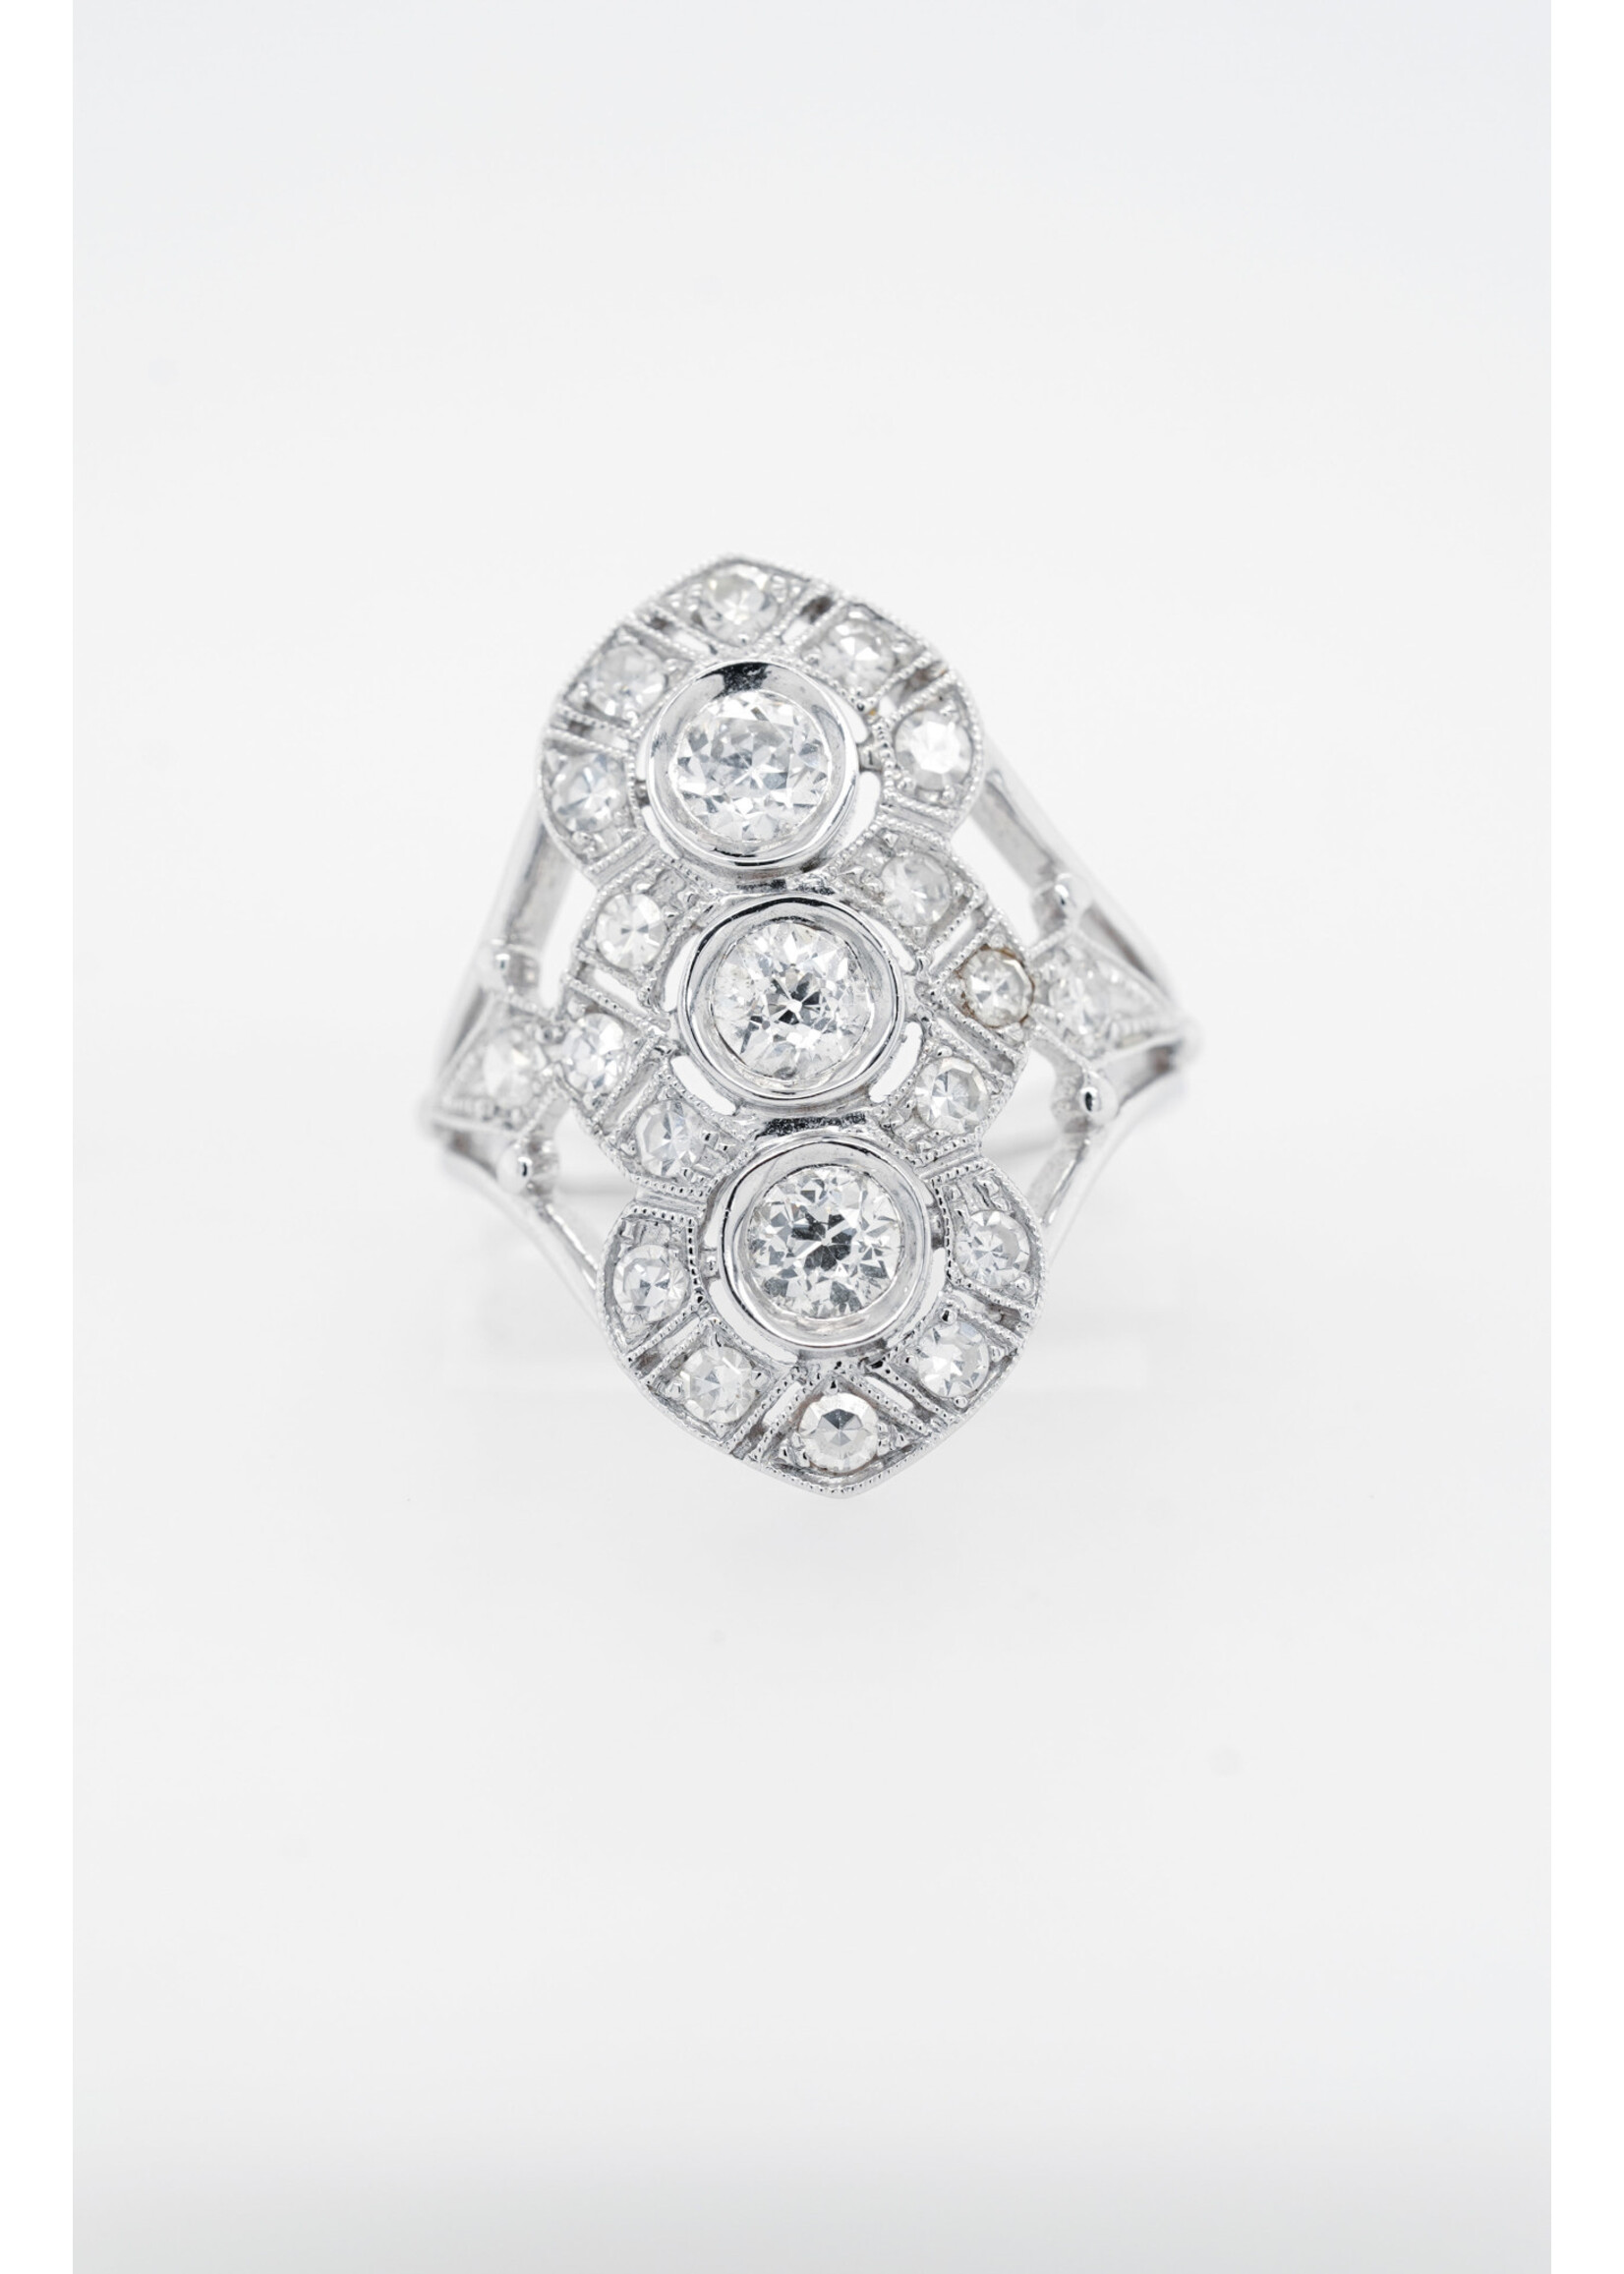 14KW 5.8g 1.60ctw Diamond Vintage Inspired Ring (size 6.5)